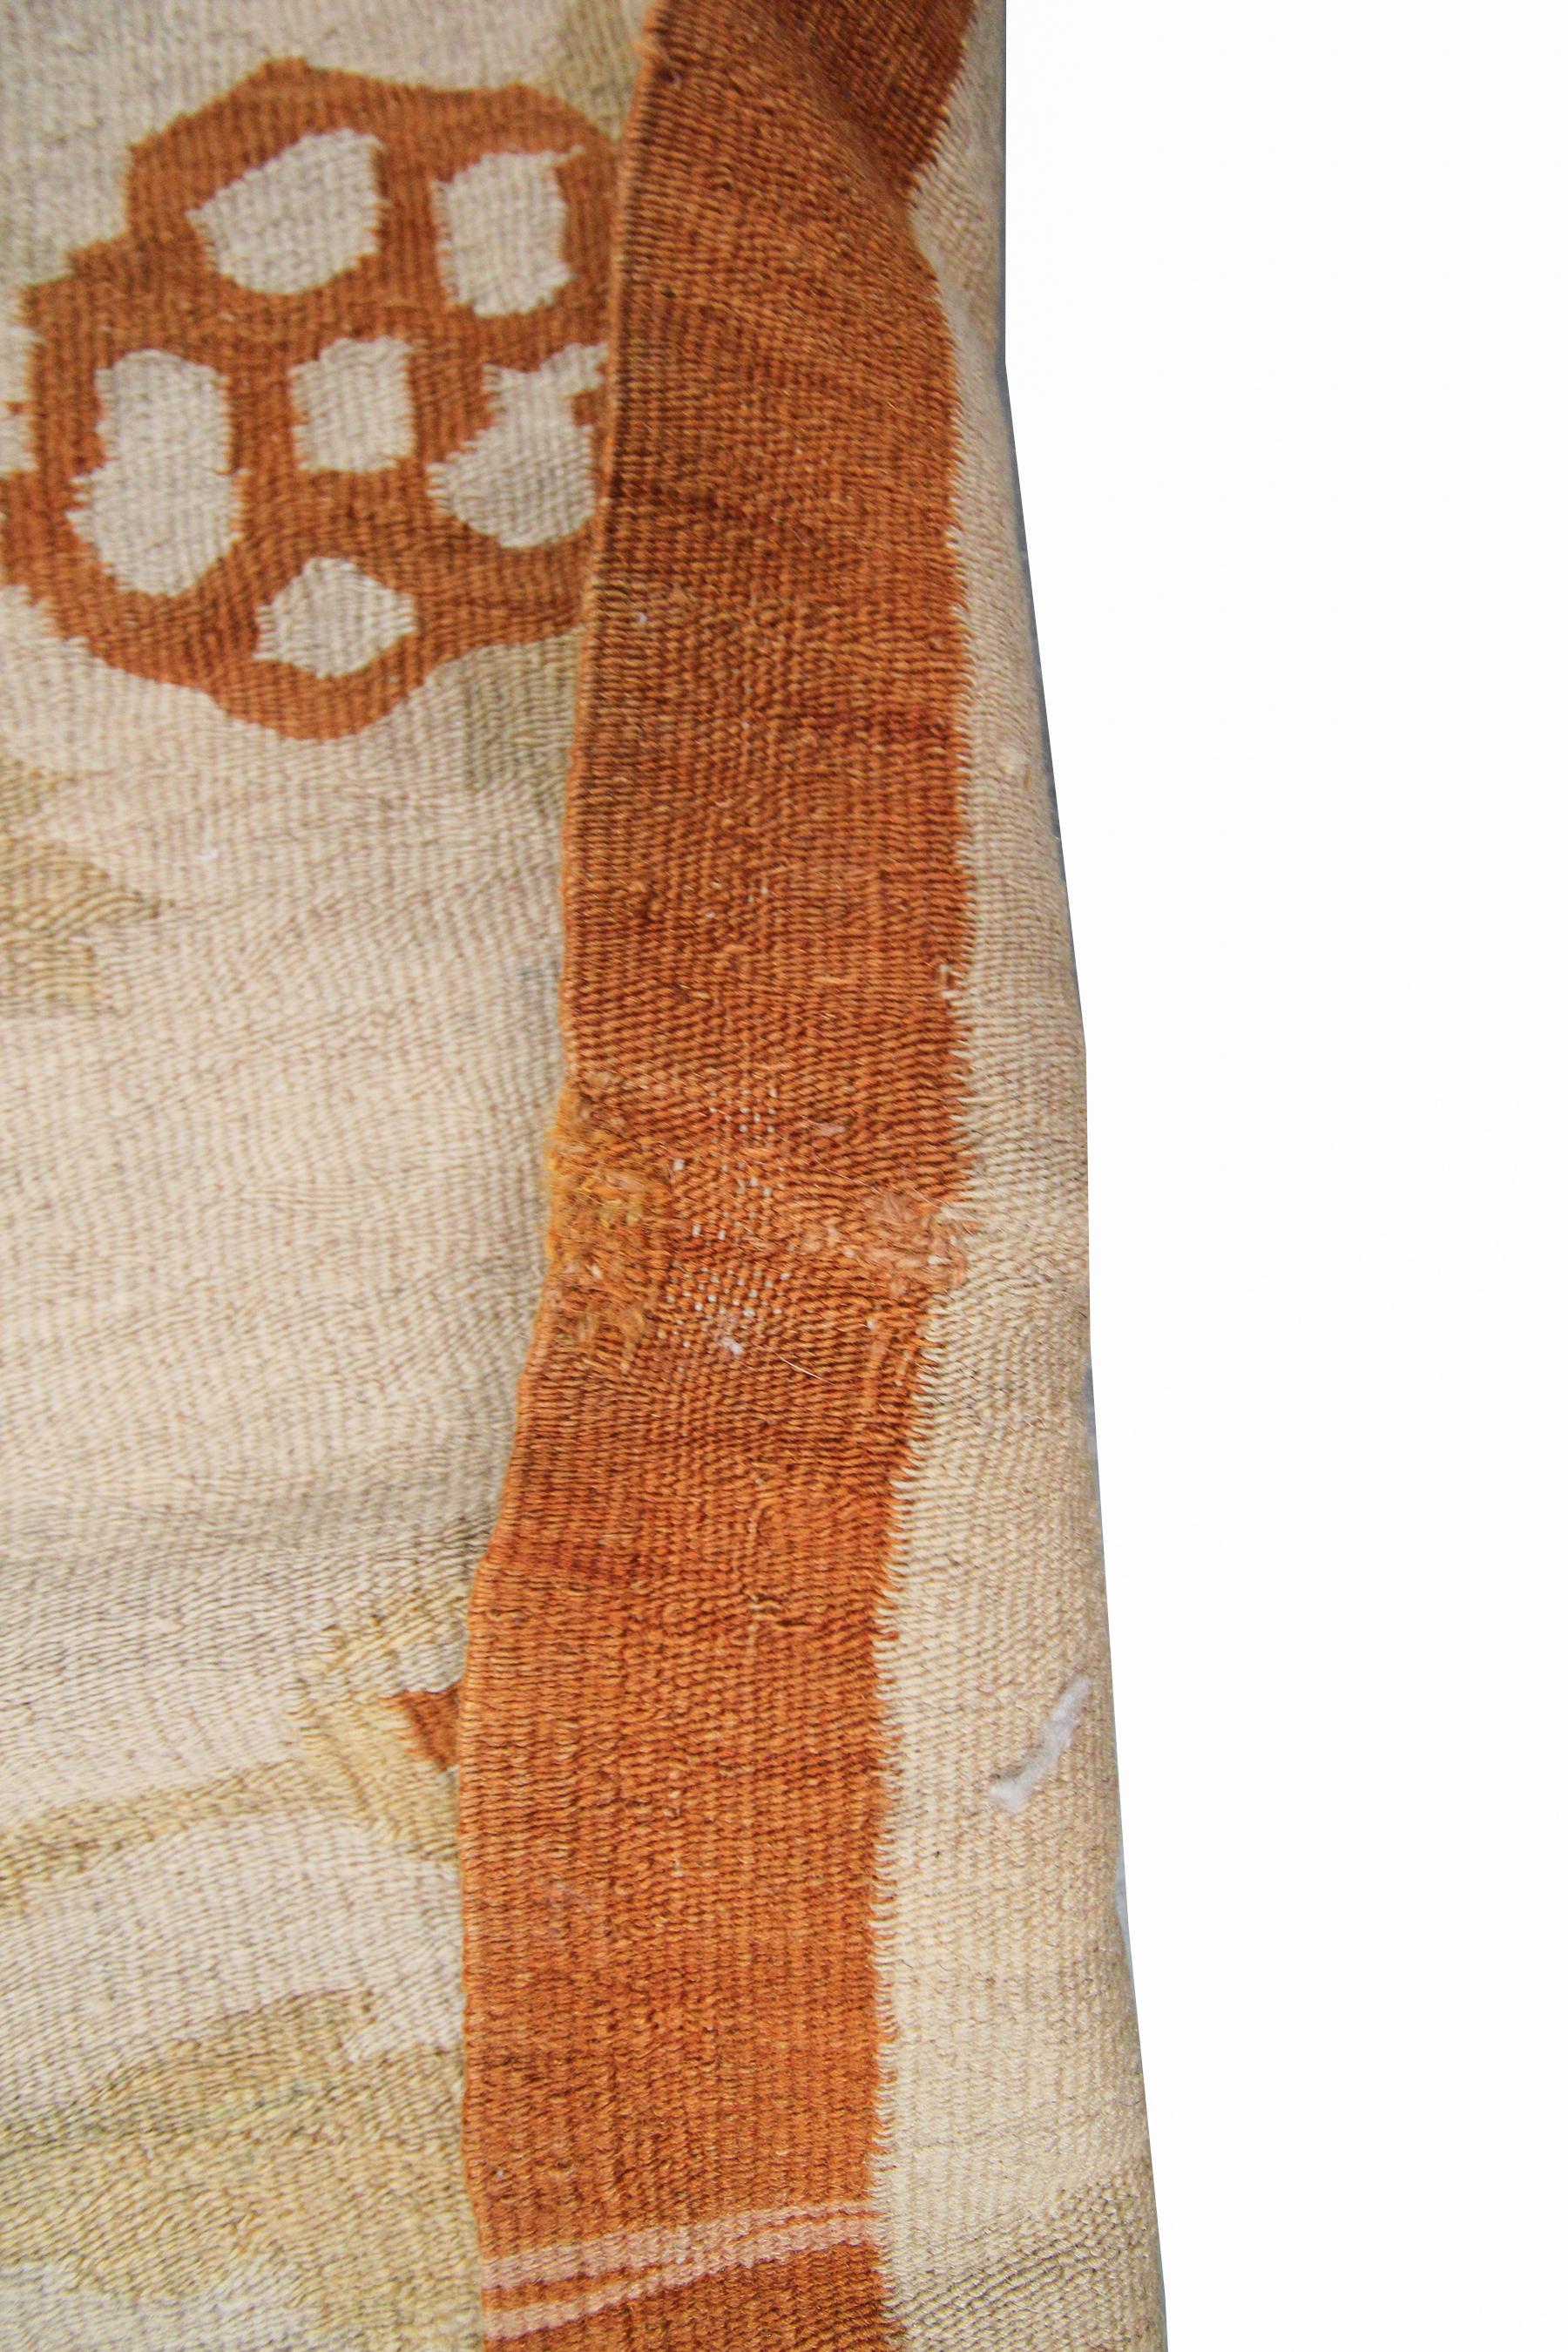 Vintage Bessarabian Kilim Rug Handwoven rug Tribal Geometric Rug 6x9 175cm x 264 For Sale 3